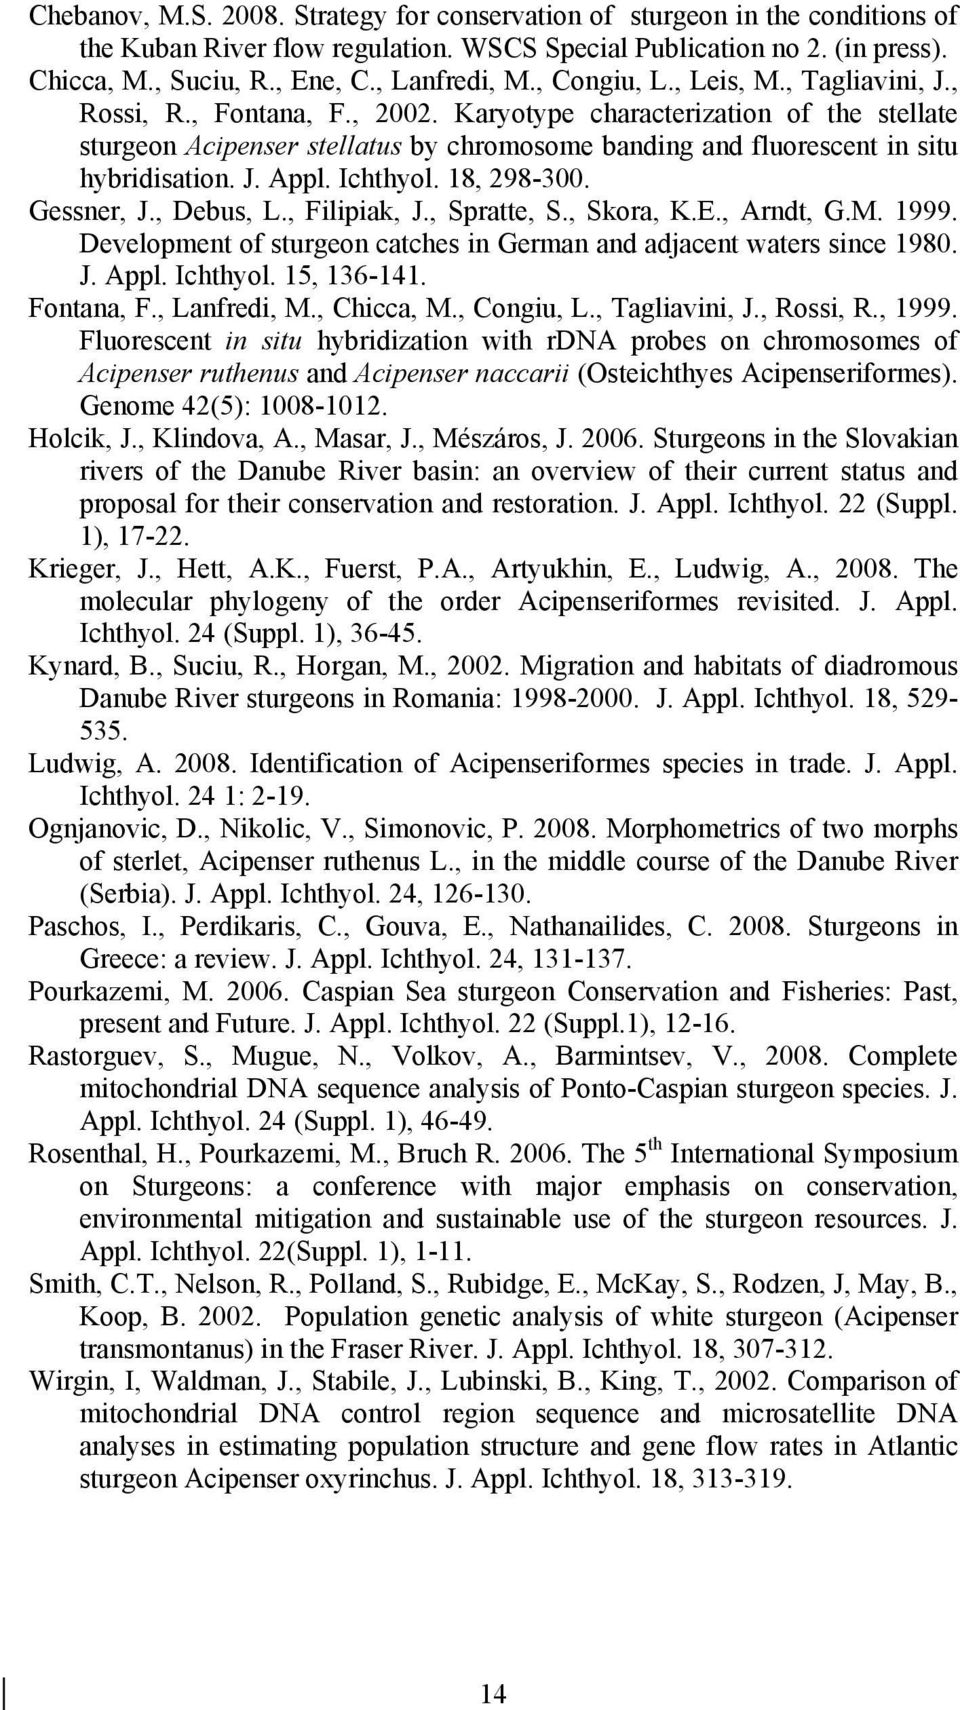 Karyotype characterization of the stellate sturgeon Acipenser stellatus by chromosome banding and fluorescent in situ hybridisation. J. Appl. Ichthyol. 18, 298-300. Gessner, J., Debus, L.